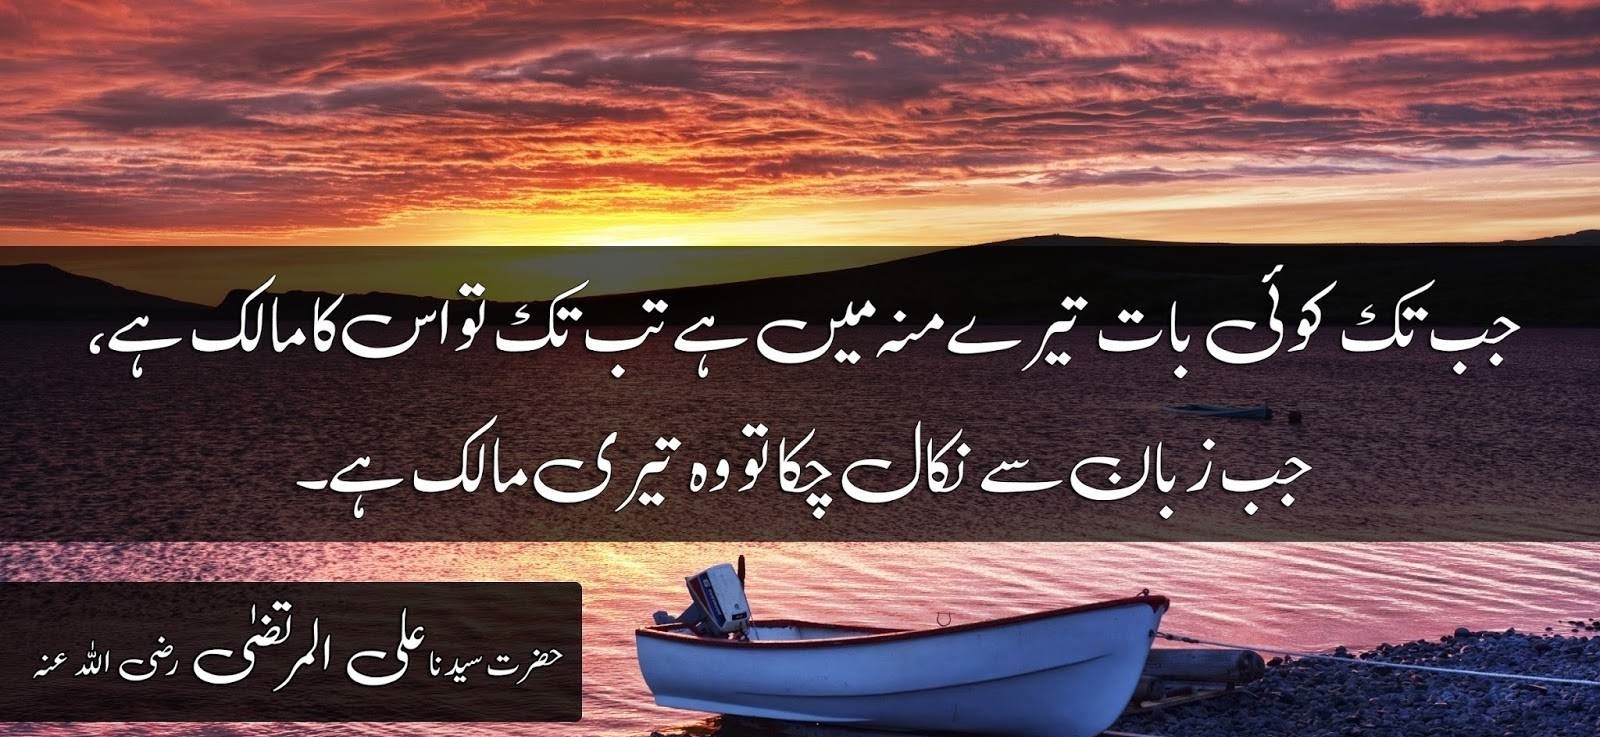 Islamic Quote In Urdu HD Wallpaper Fb Cover Smshousepk